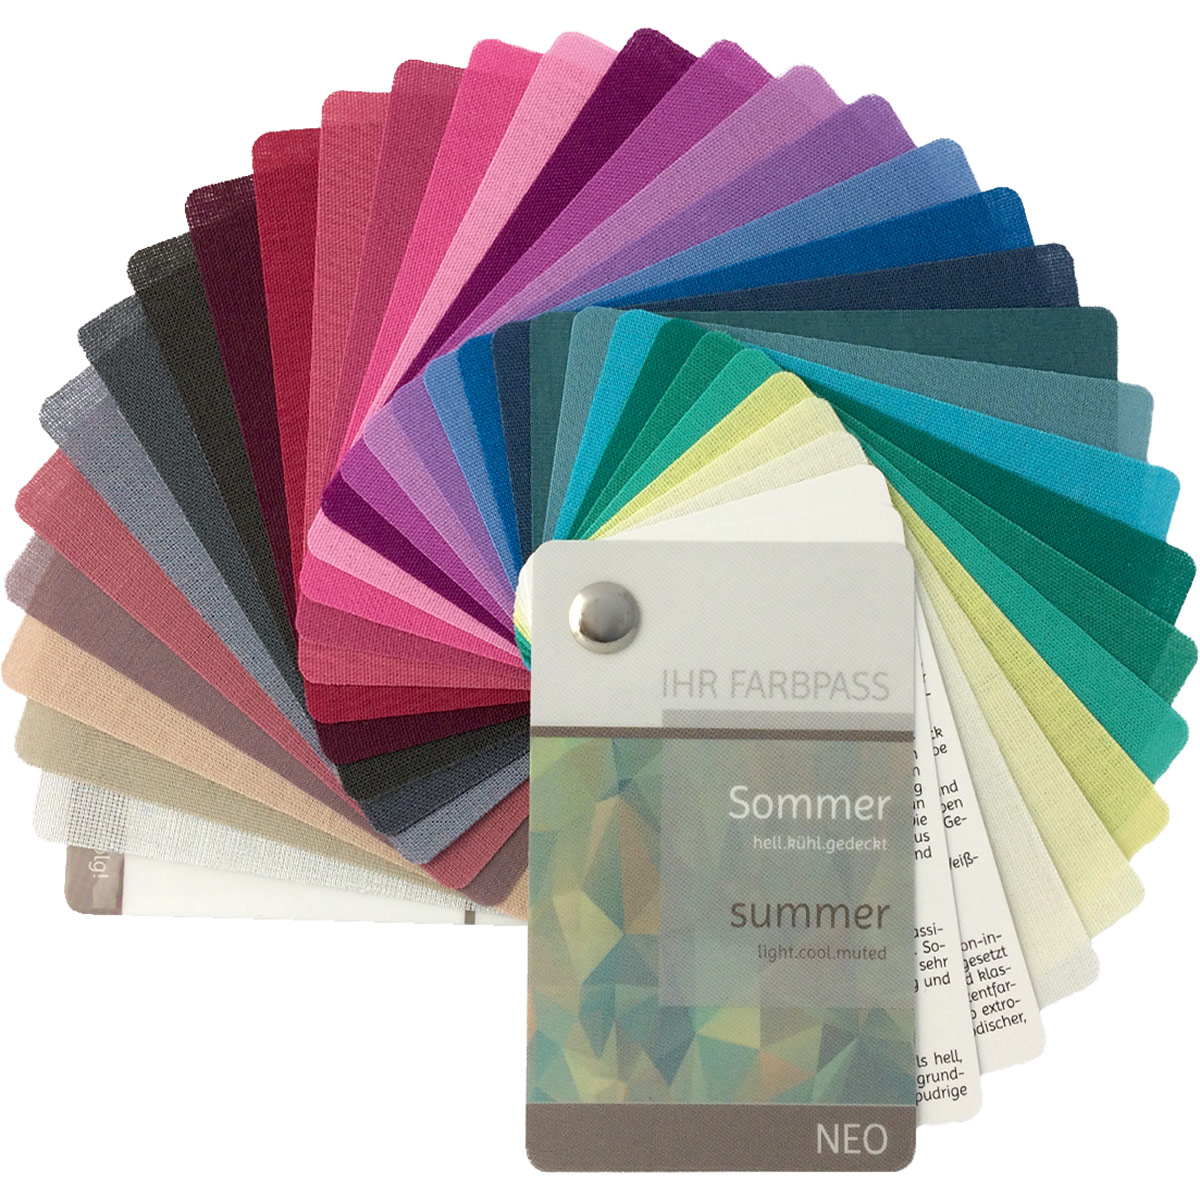 Farbpass Sommer - Neo, 30 Farben